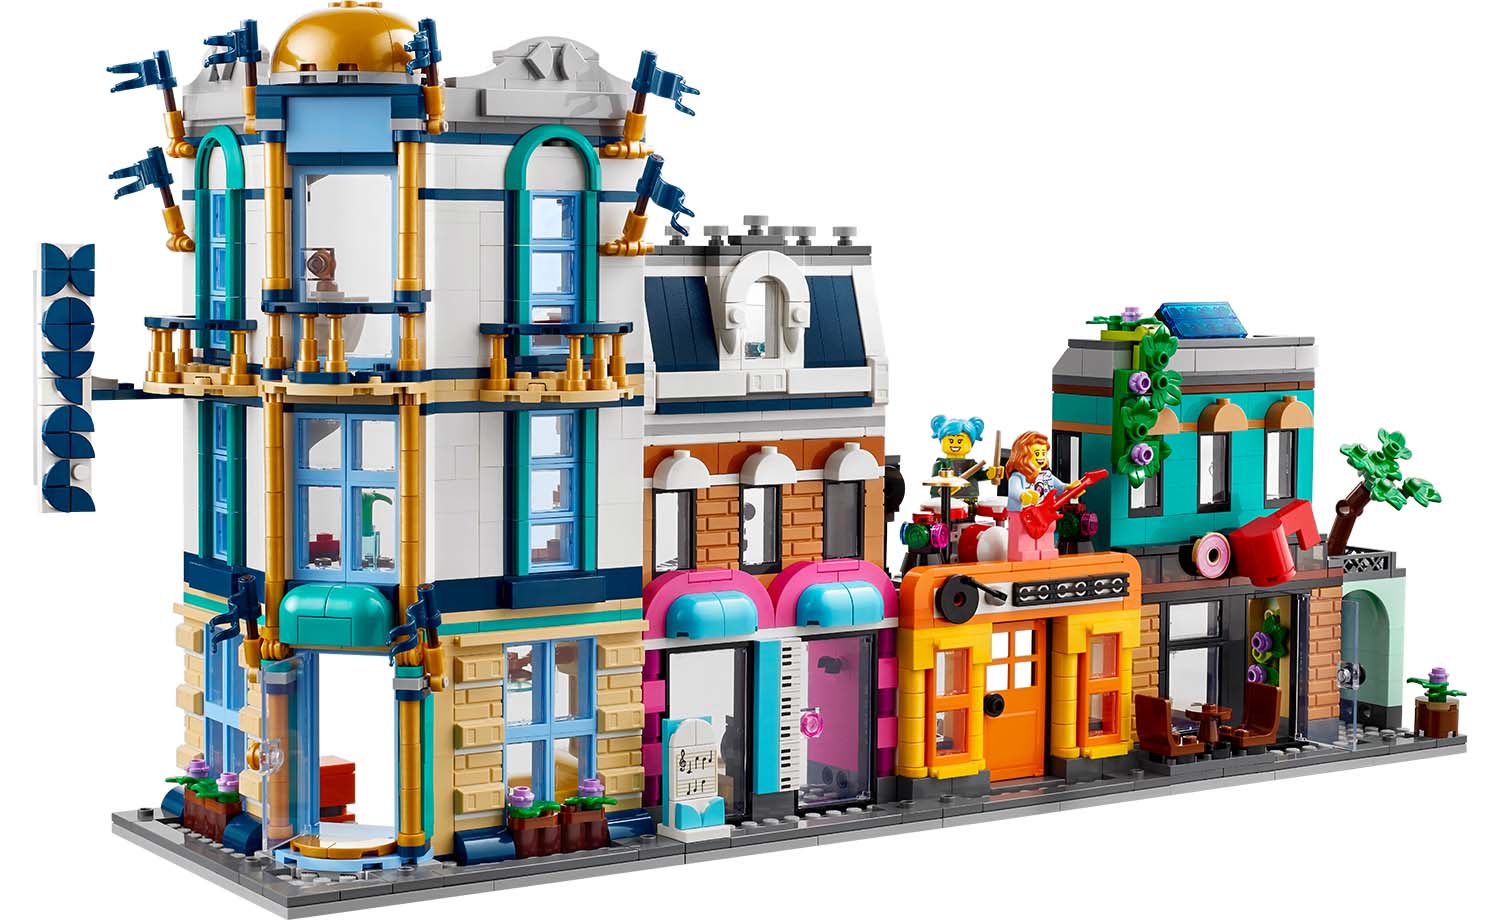 Building Set Lego Creator - Main Street